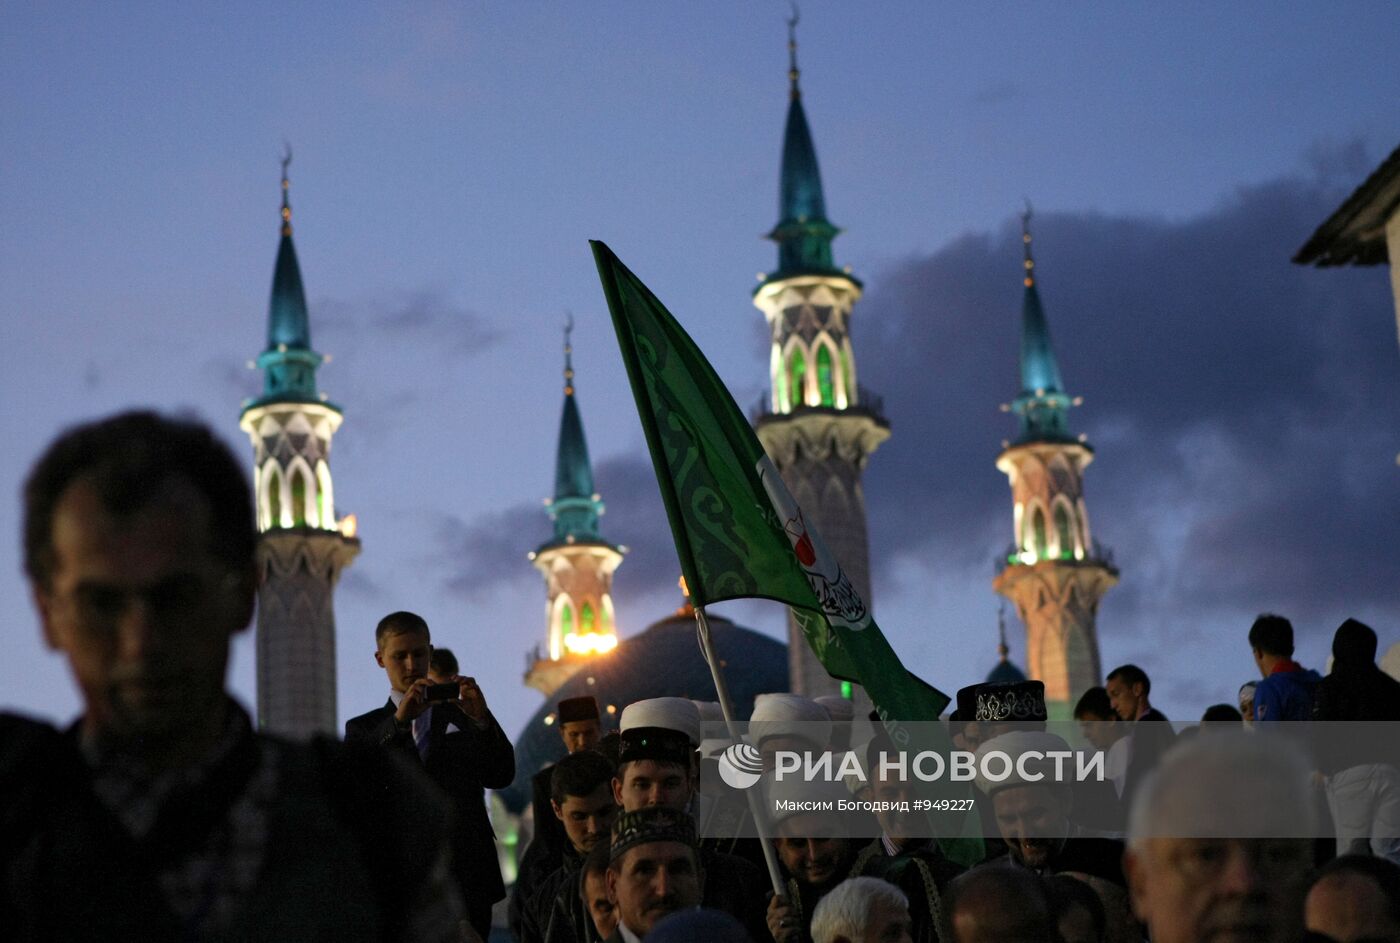 Республиканский ифтар "Рамазан-2011" в Казани